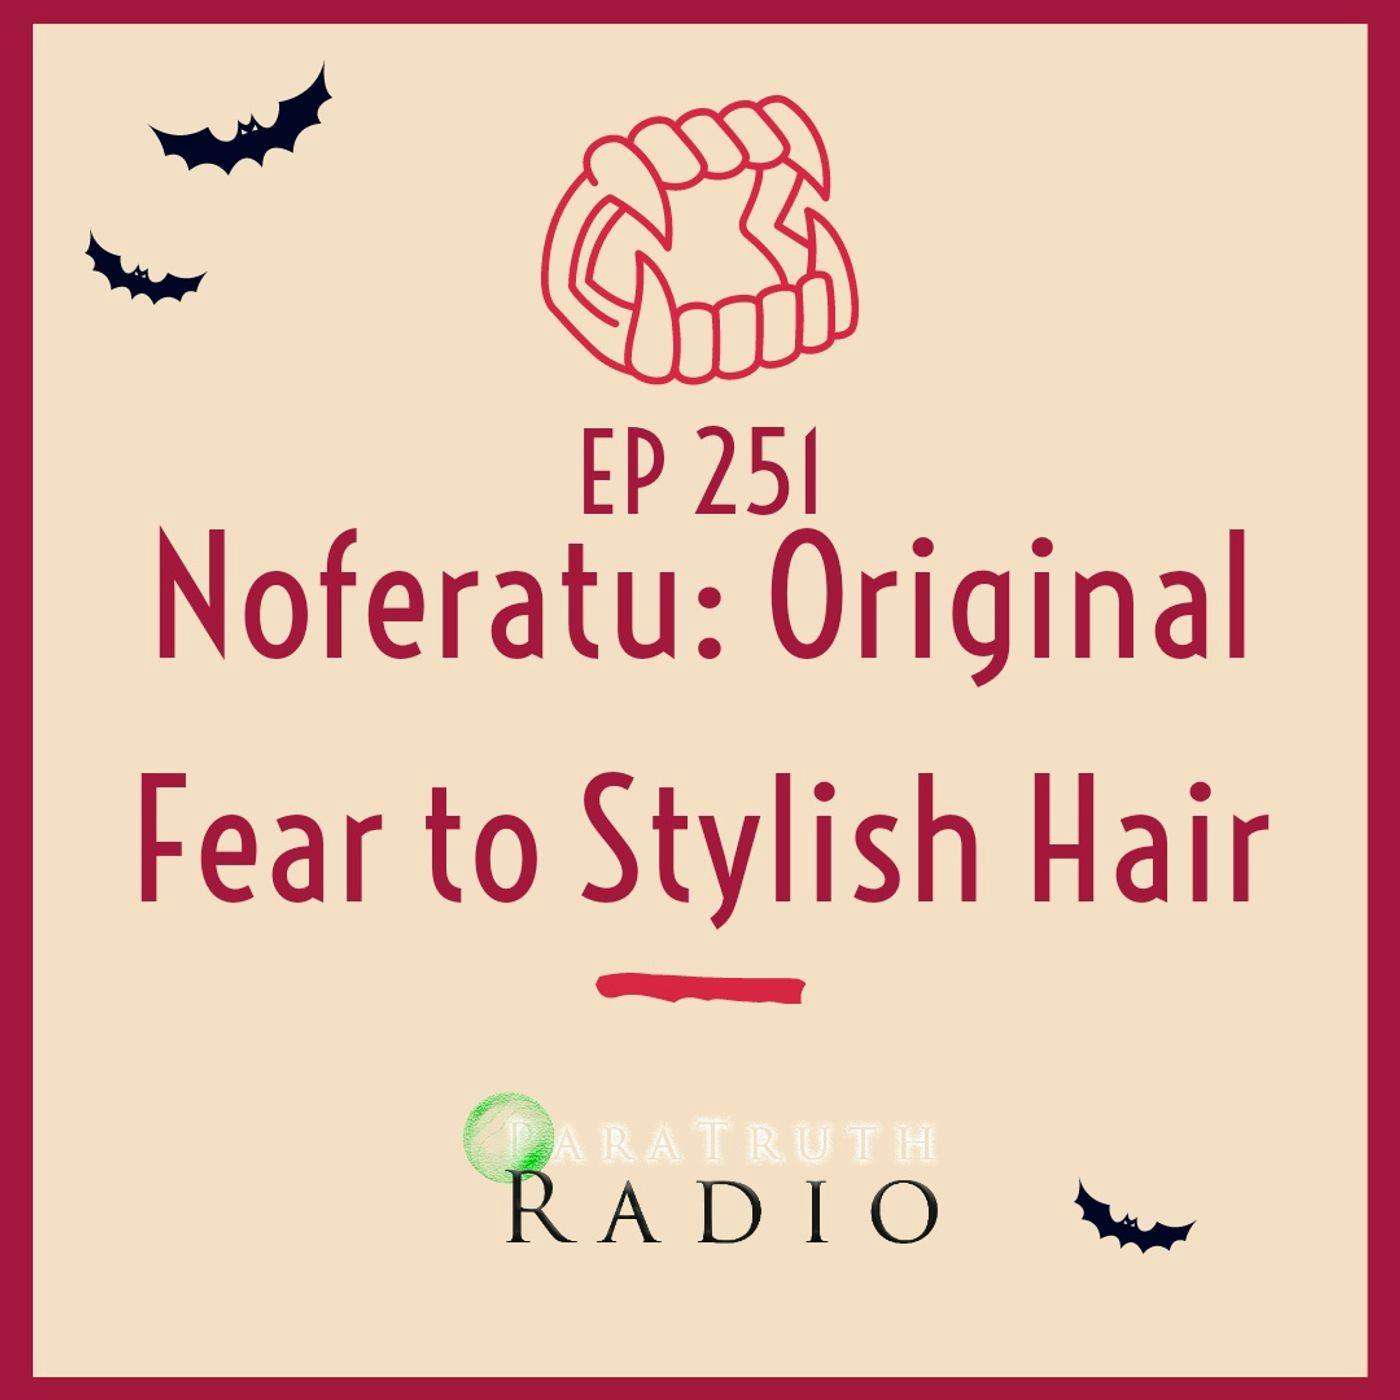 Nosferatu: Original Fear to Stylish Hair Image